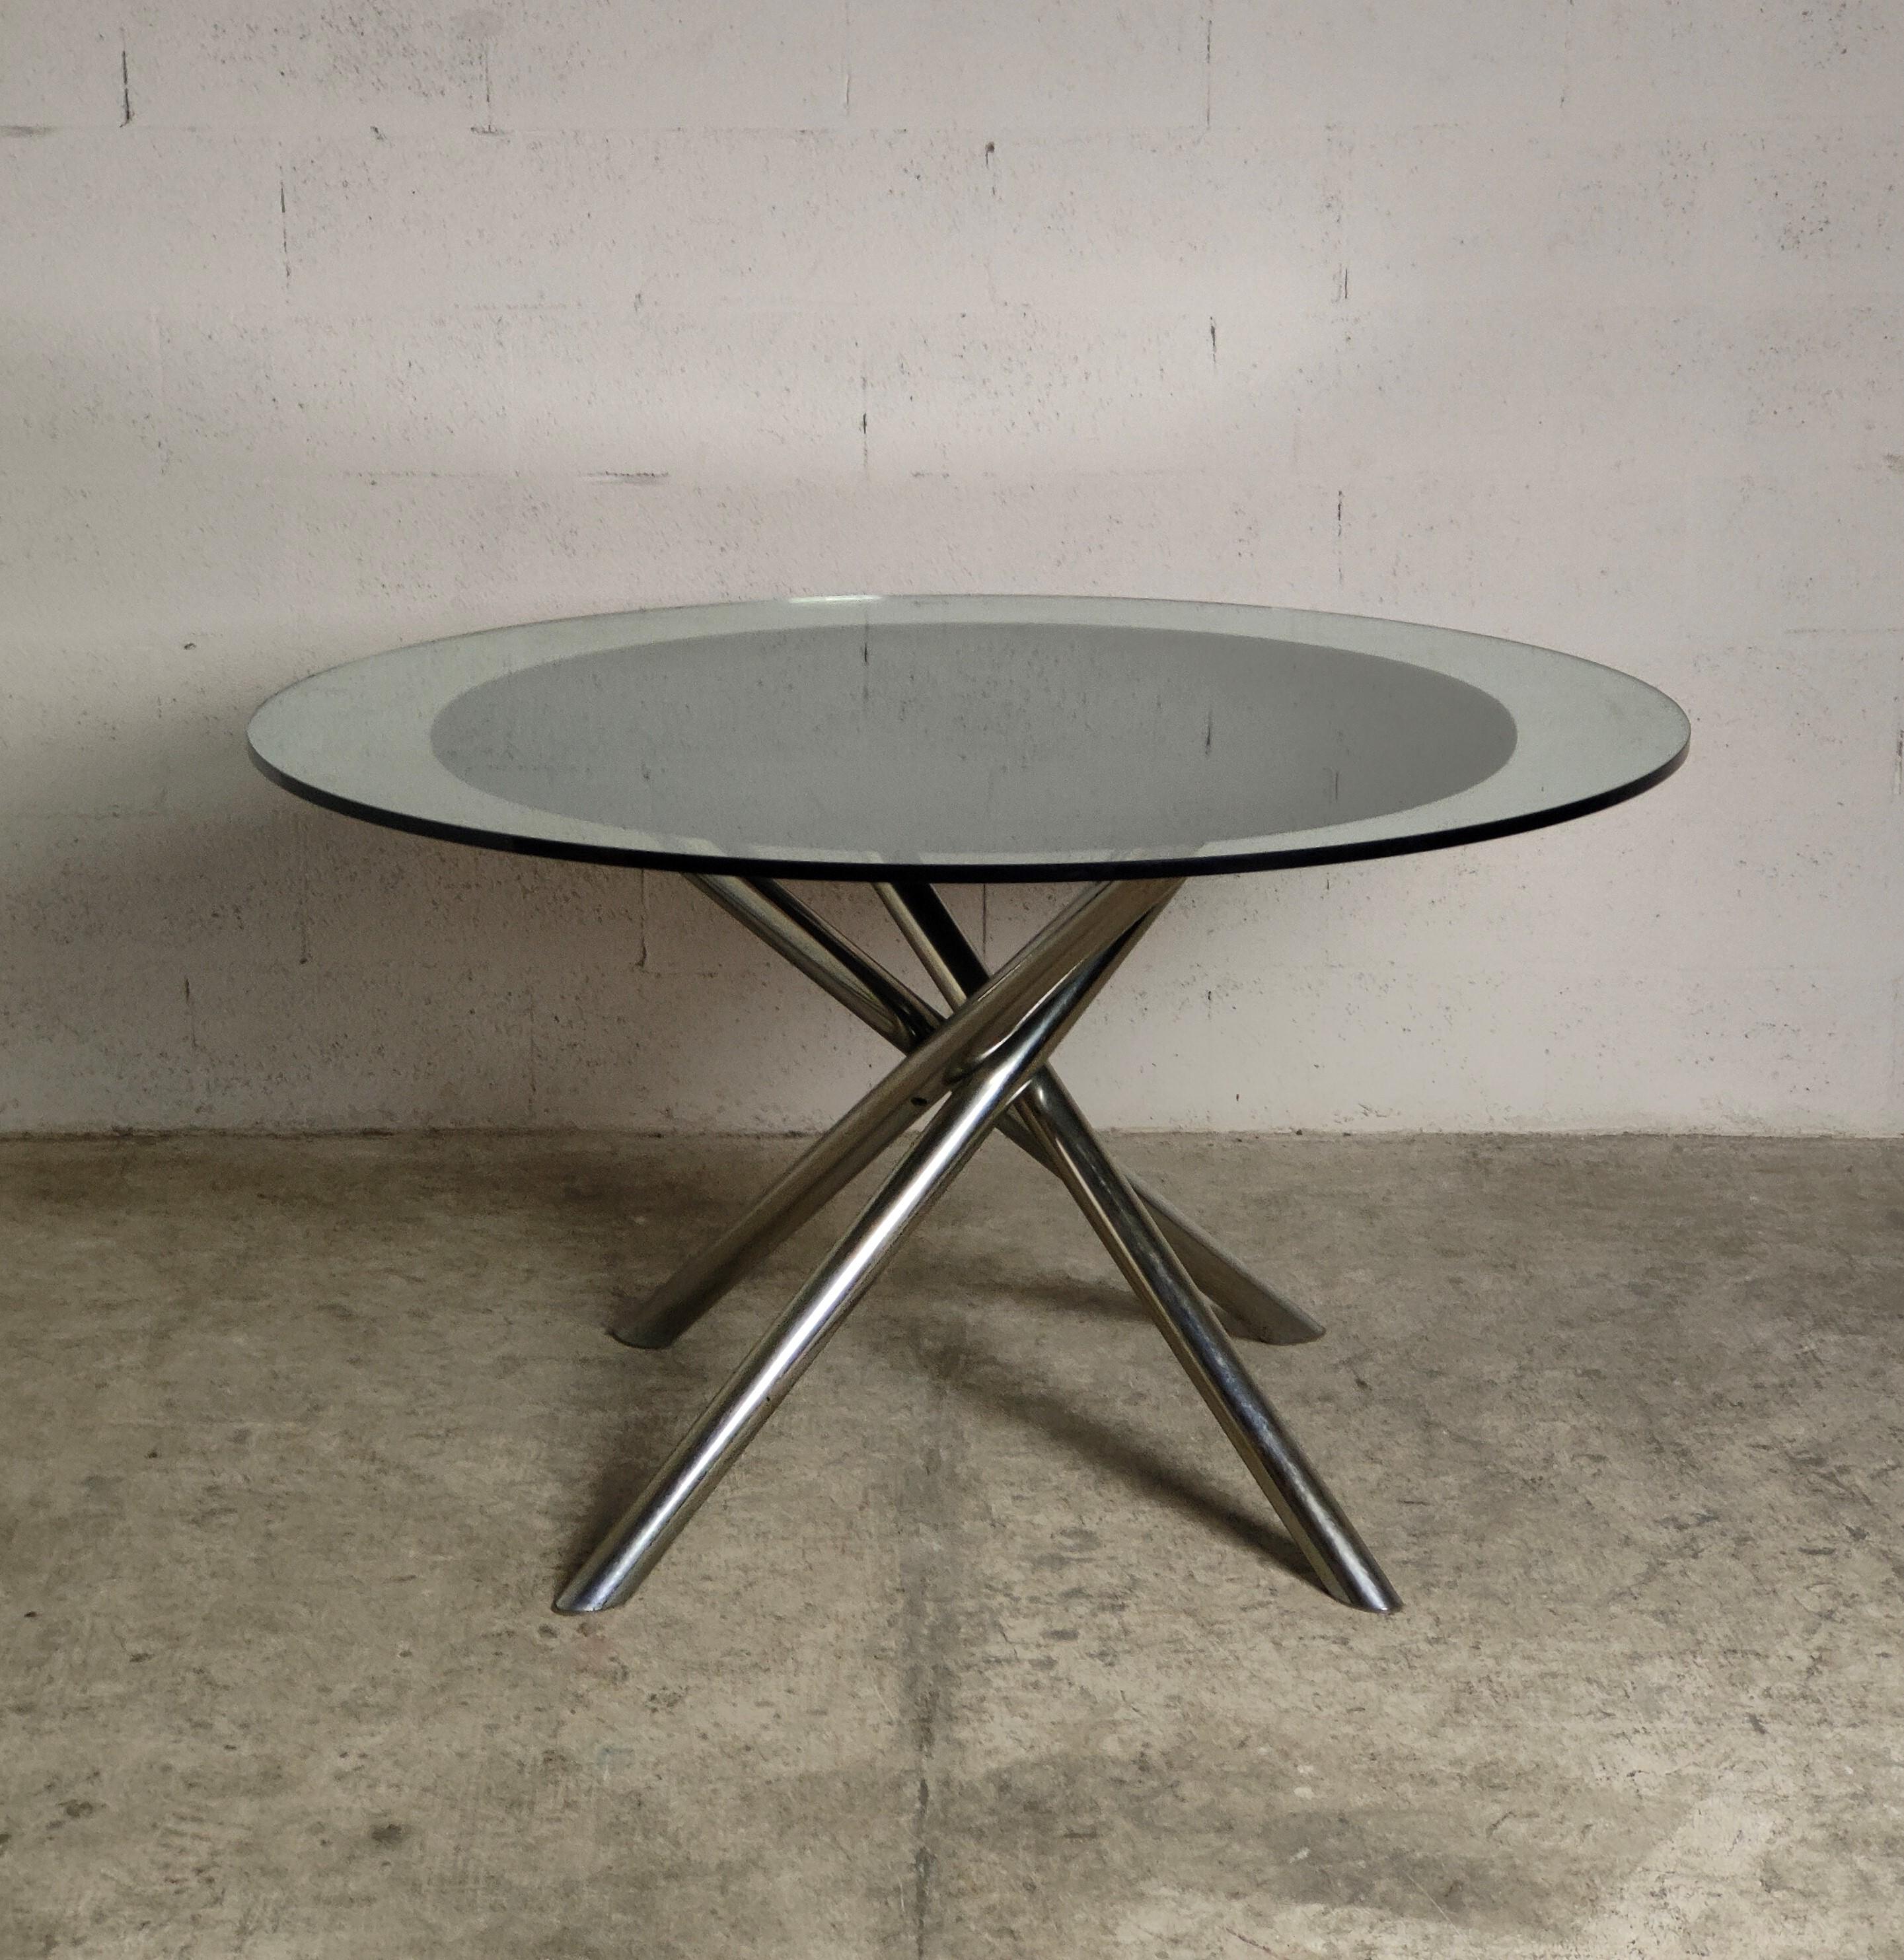 Late 20th Century Nodo Round Glass Table by Carlo Bartoli for Tisettanta 1970s